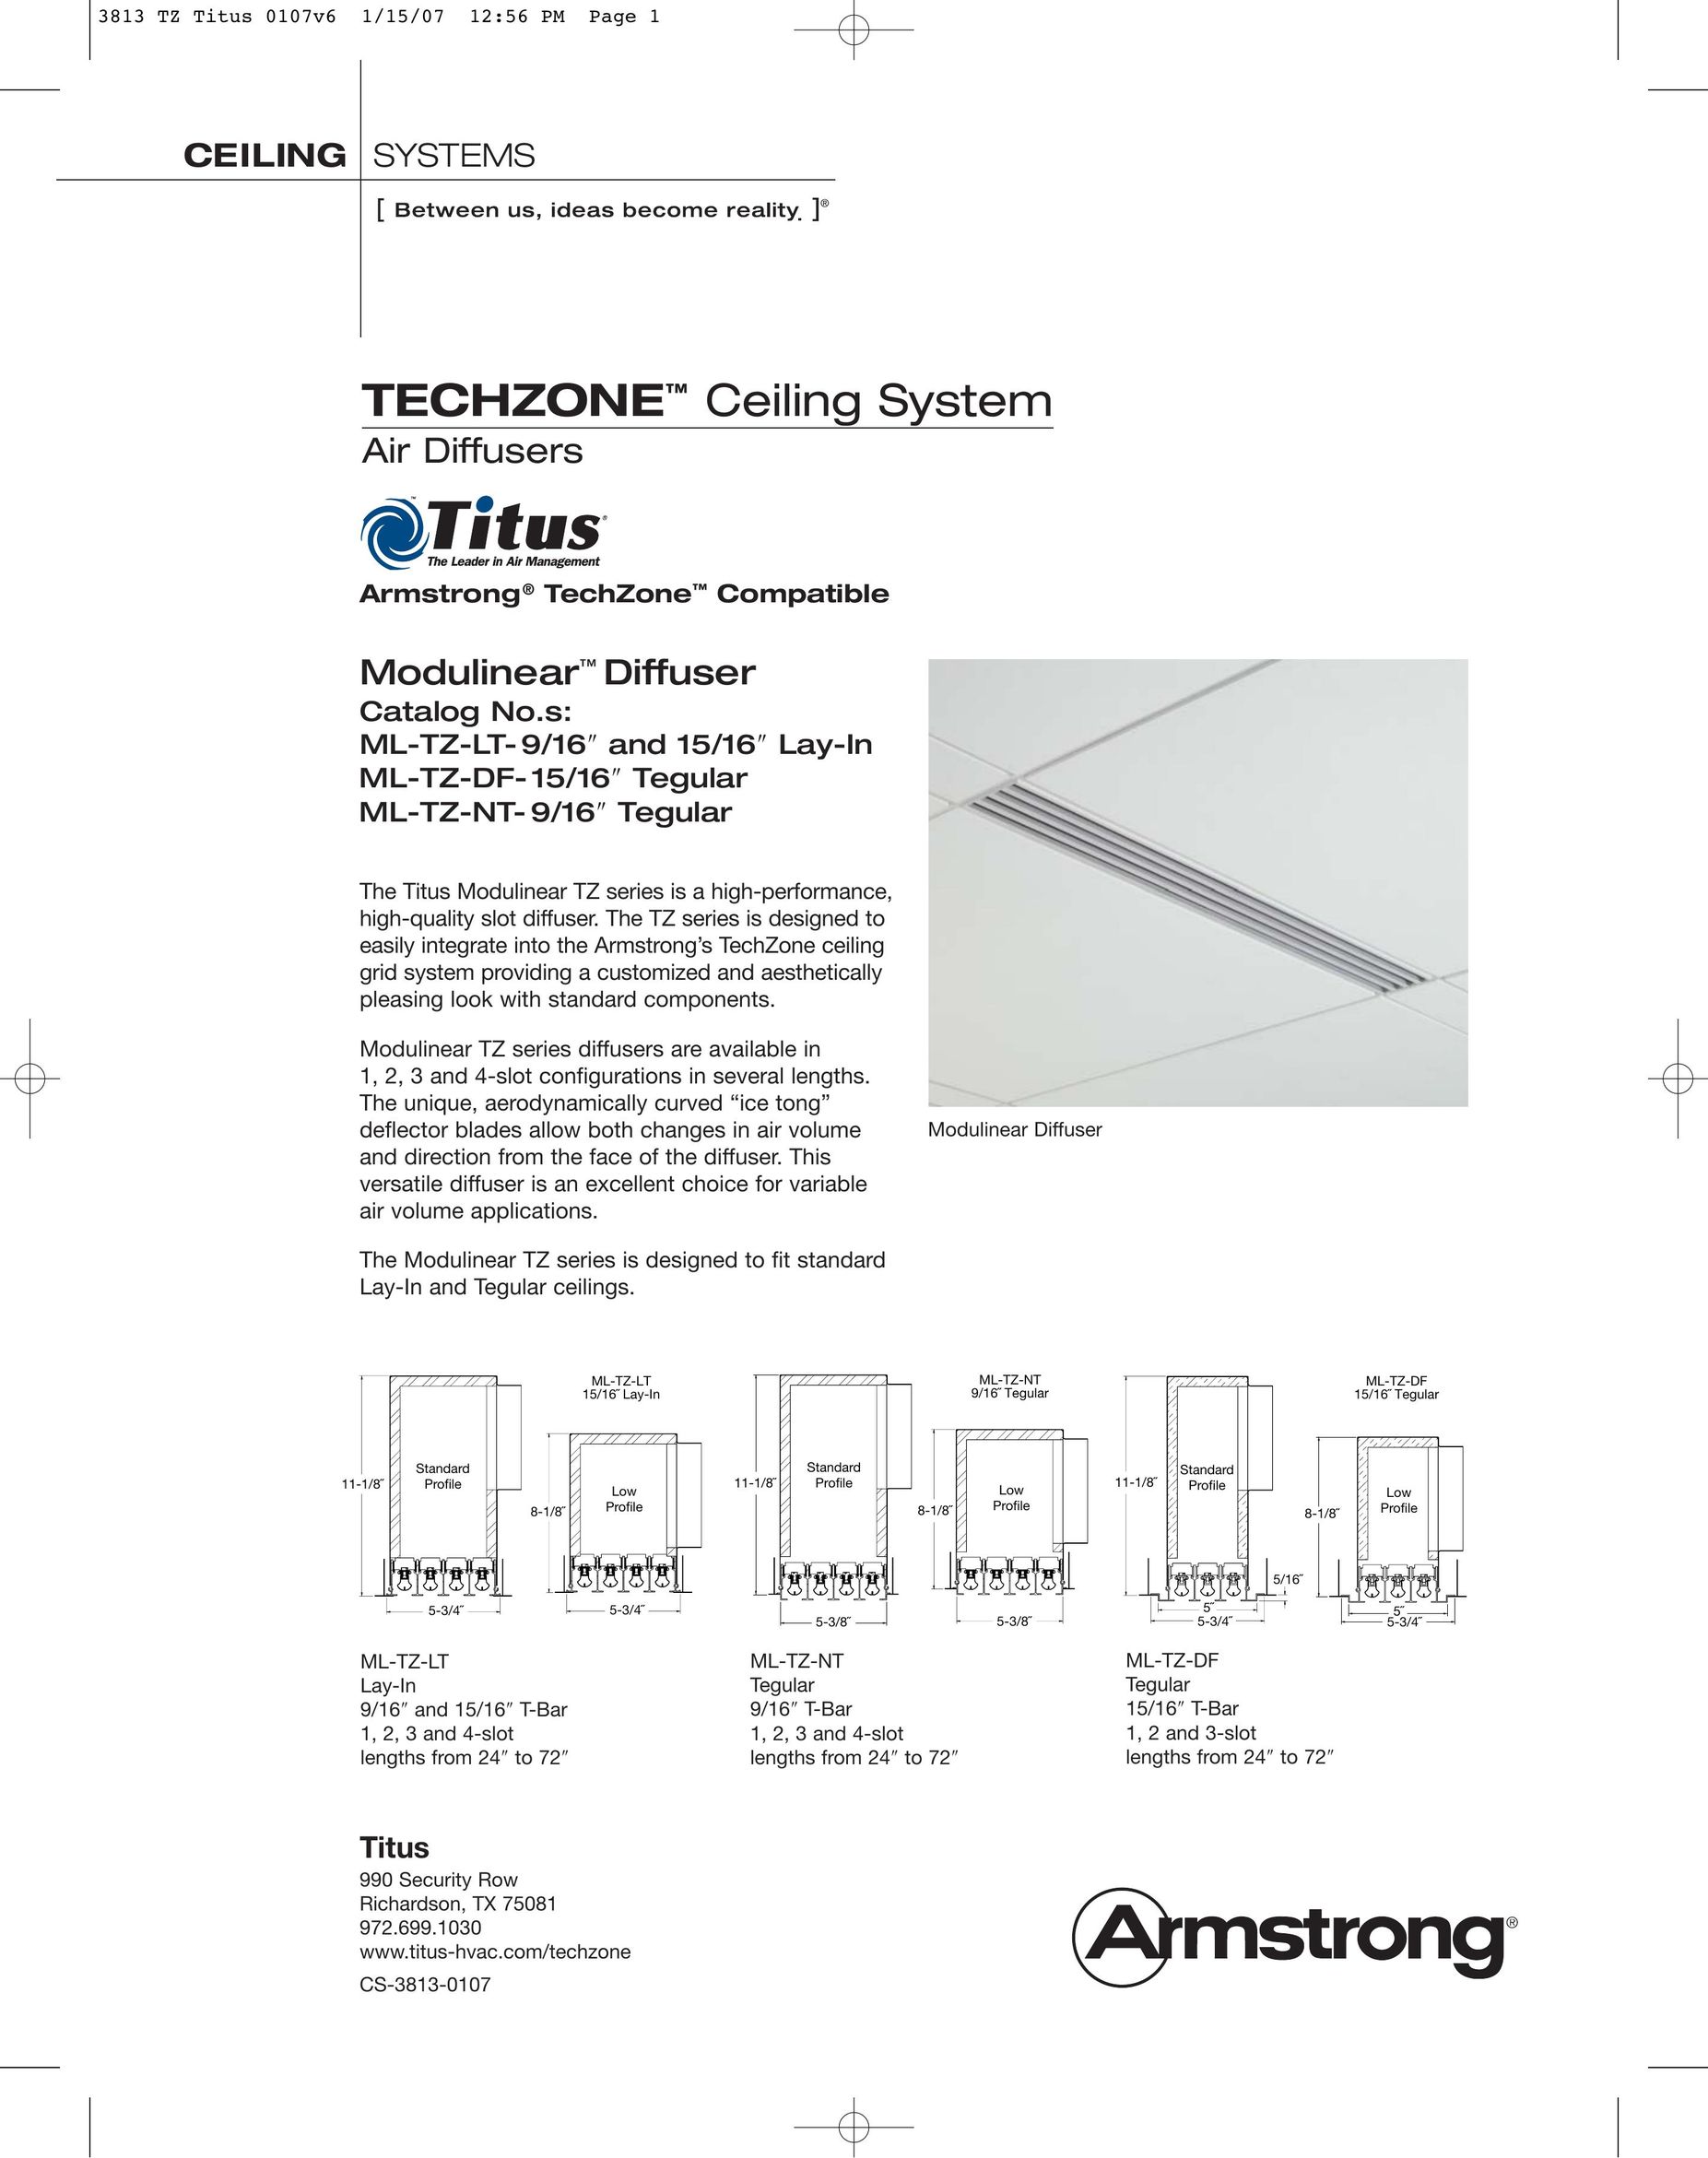 Armstrong World Industries ML-TZ-DF Indoor Furnishings User Manual